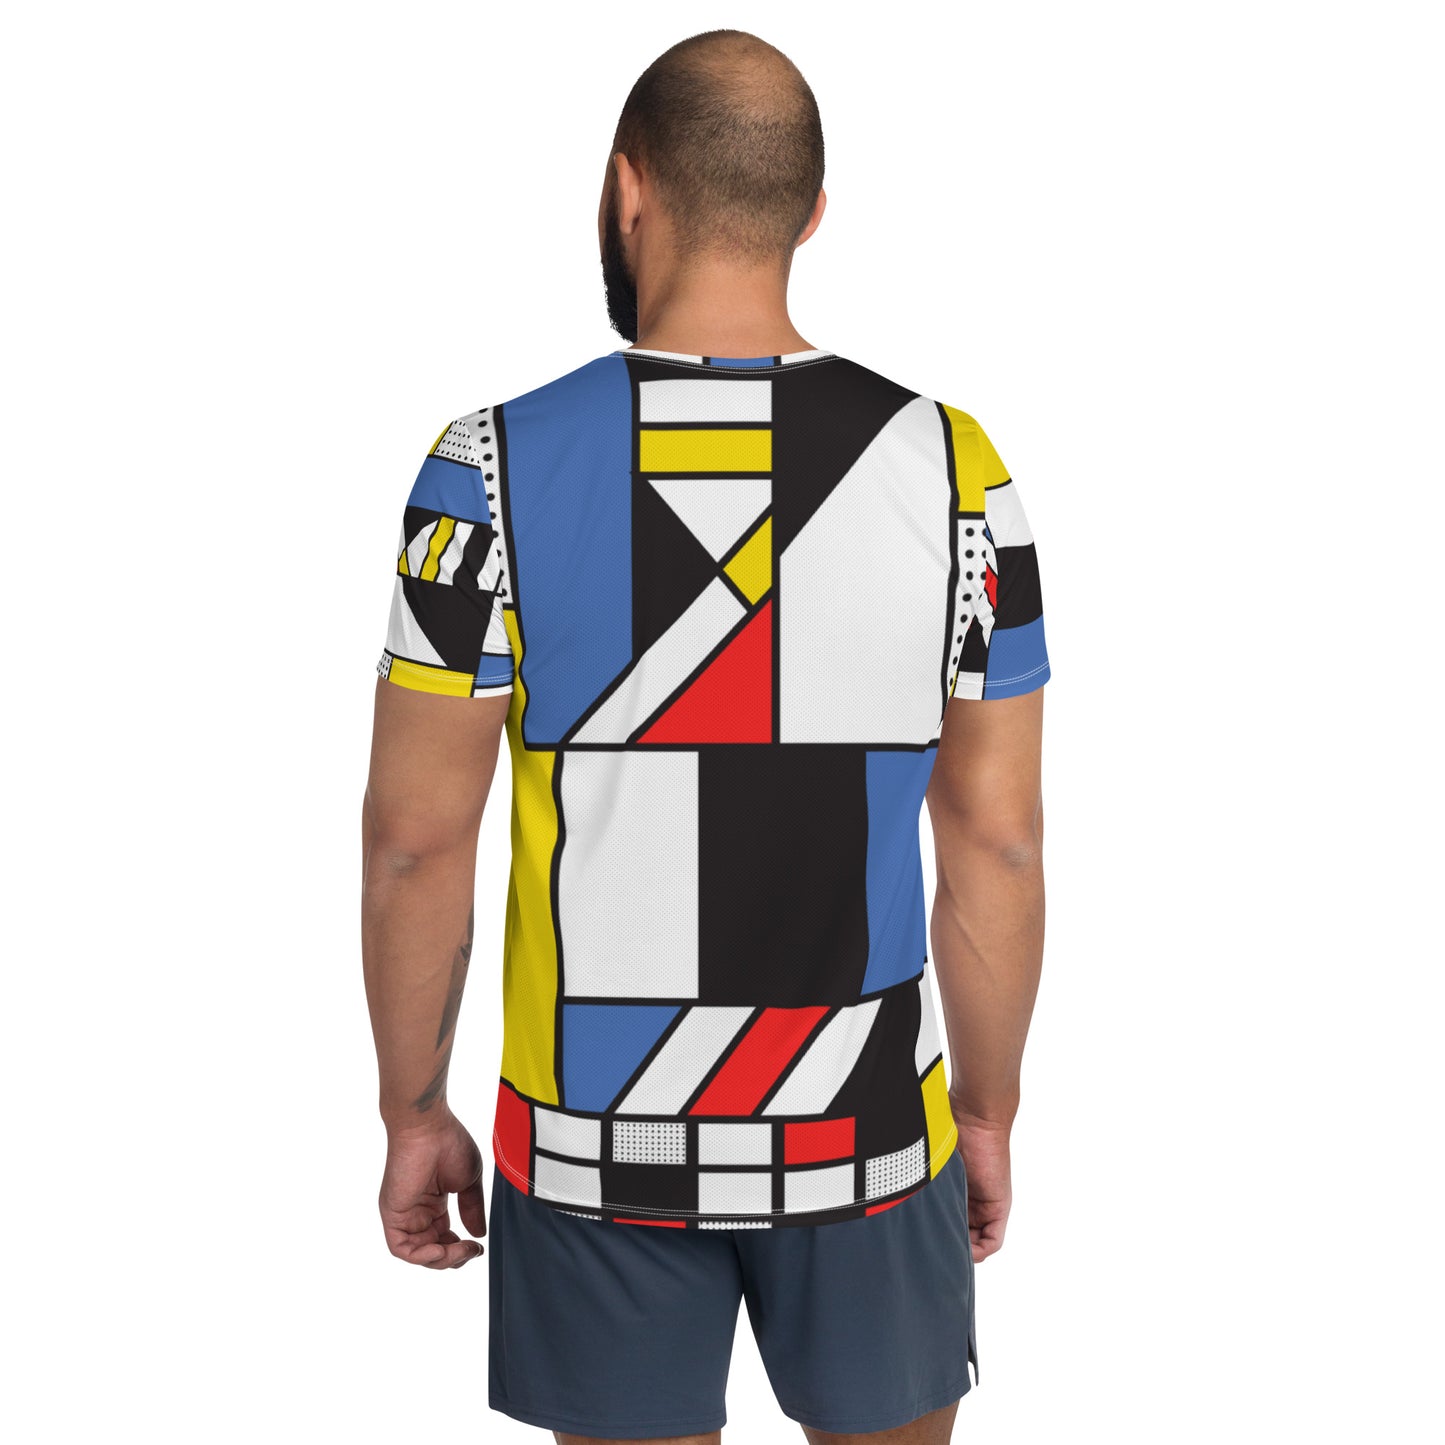 All-Over Print Men's Athletic T-shirt with Piet Mondrian design sourced Vecteezy.com